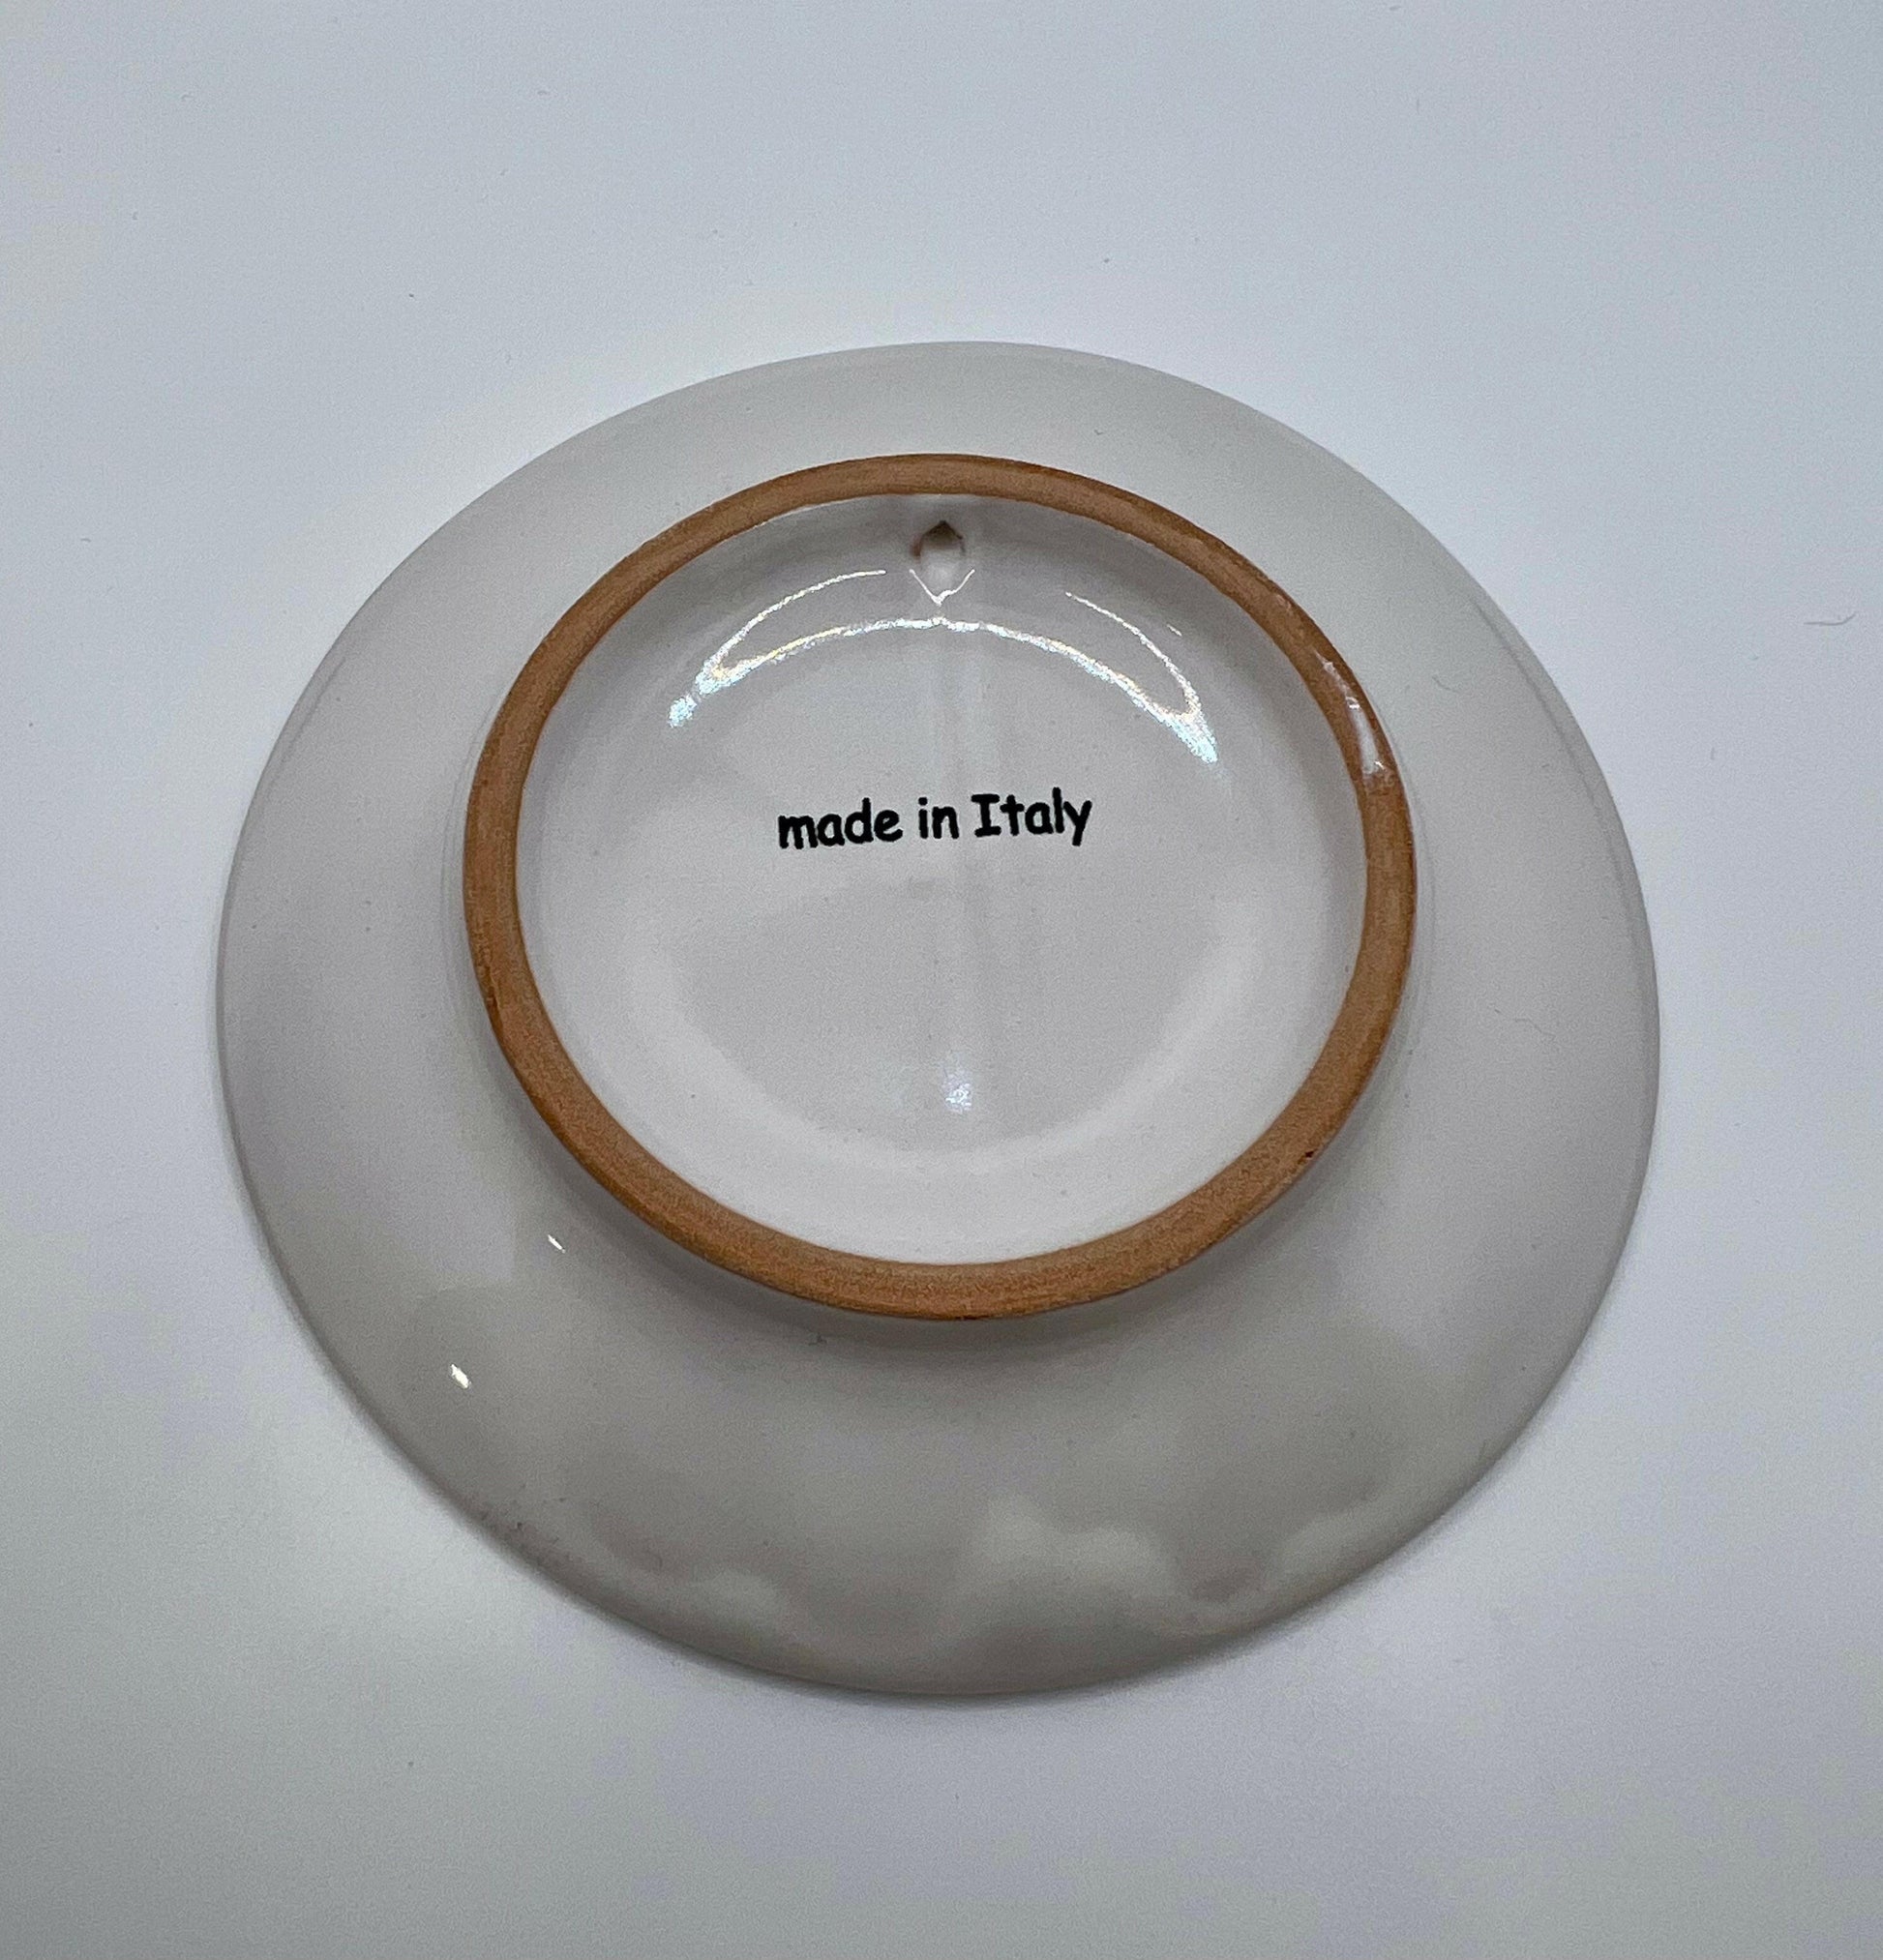 Sicilian 4.75” Decorative Plate in Ceramic - Made in Italy.